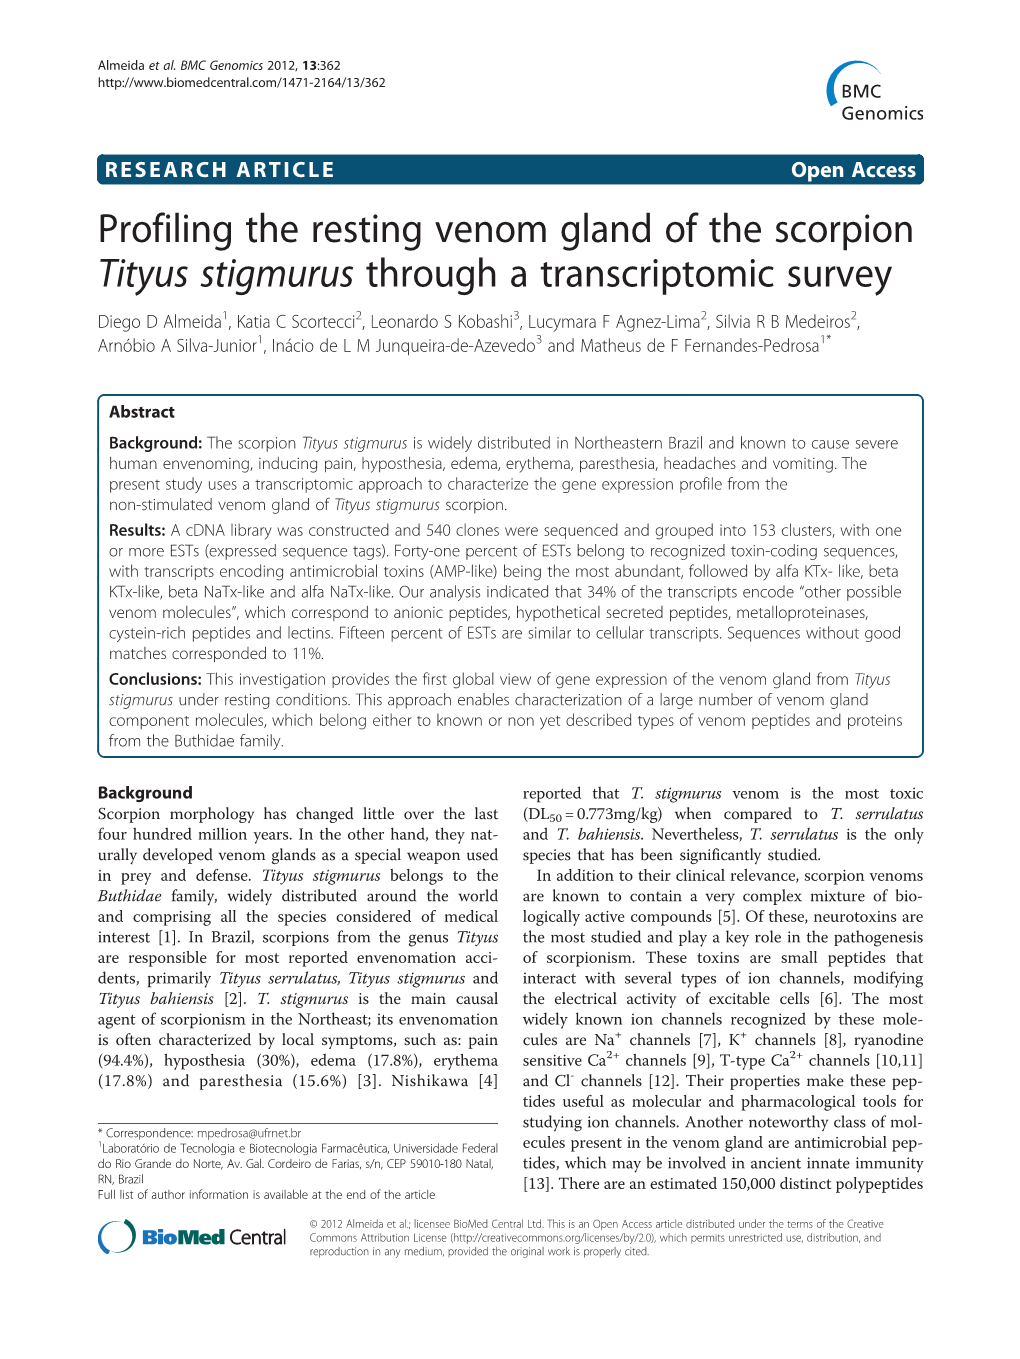 Profiling the Resting Venom Gland of the Scorpion Tityus Stigmurus